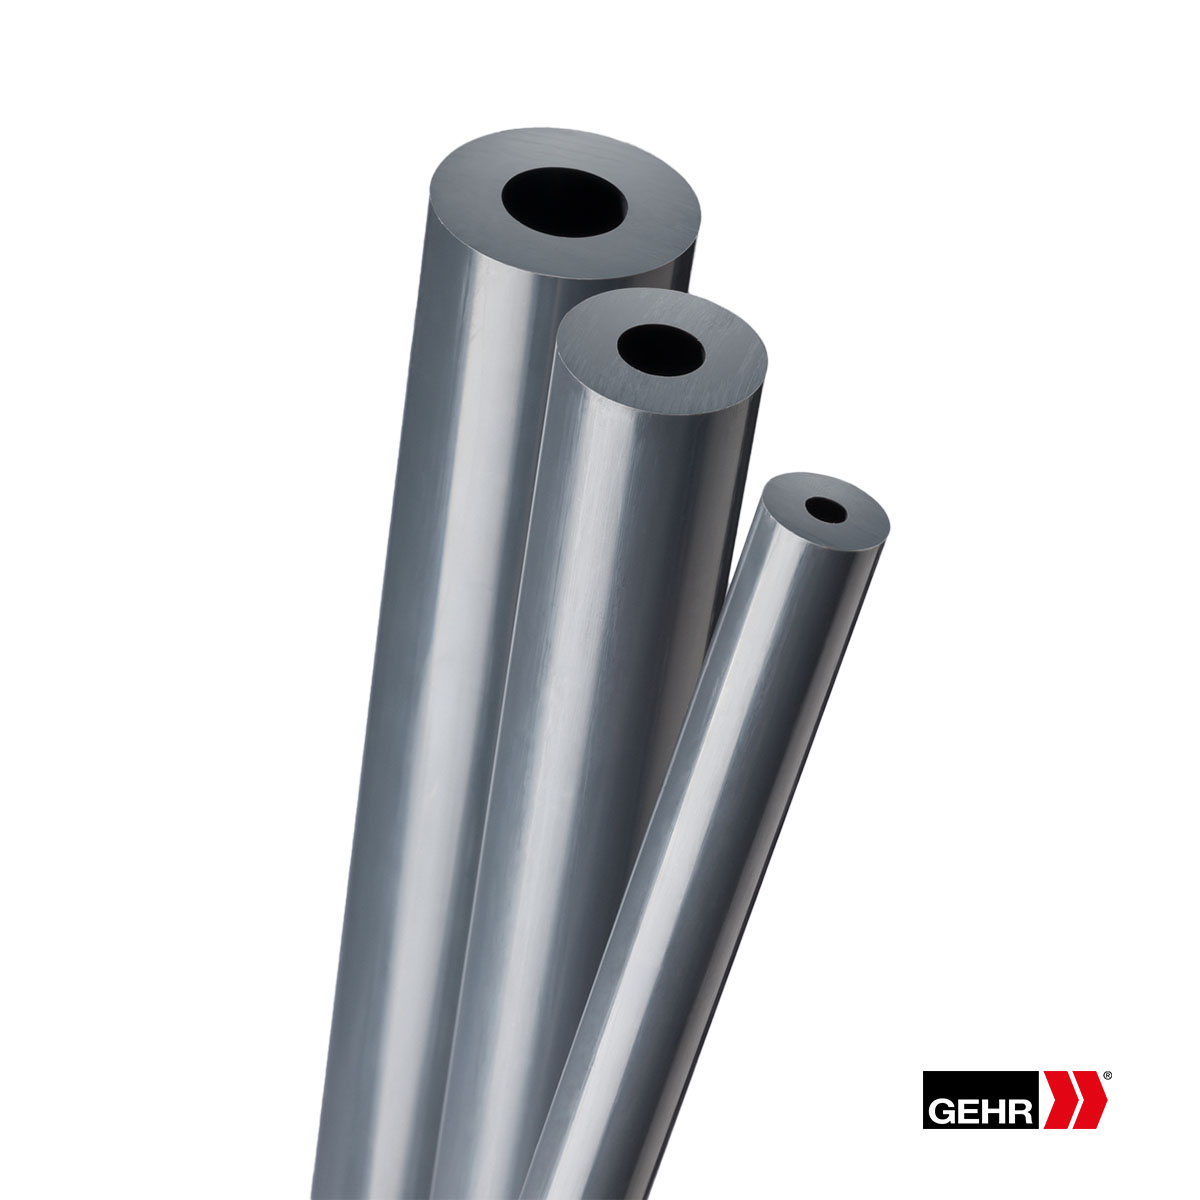 GEHR PVC-U Hollow bars 100 x 50 mm dark grey